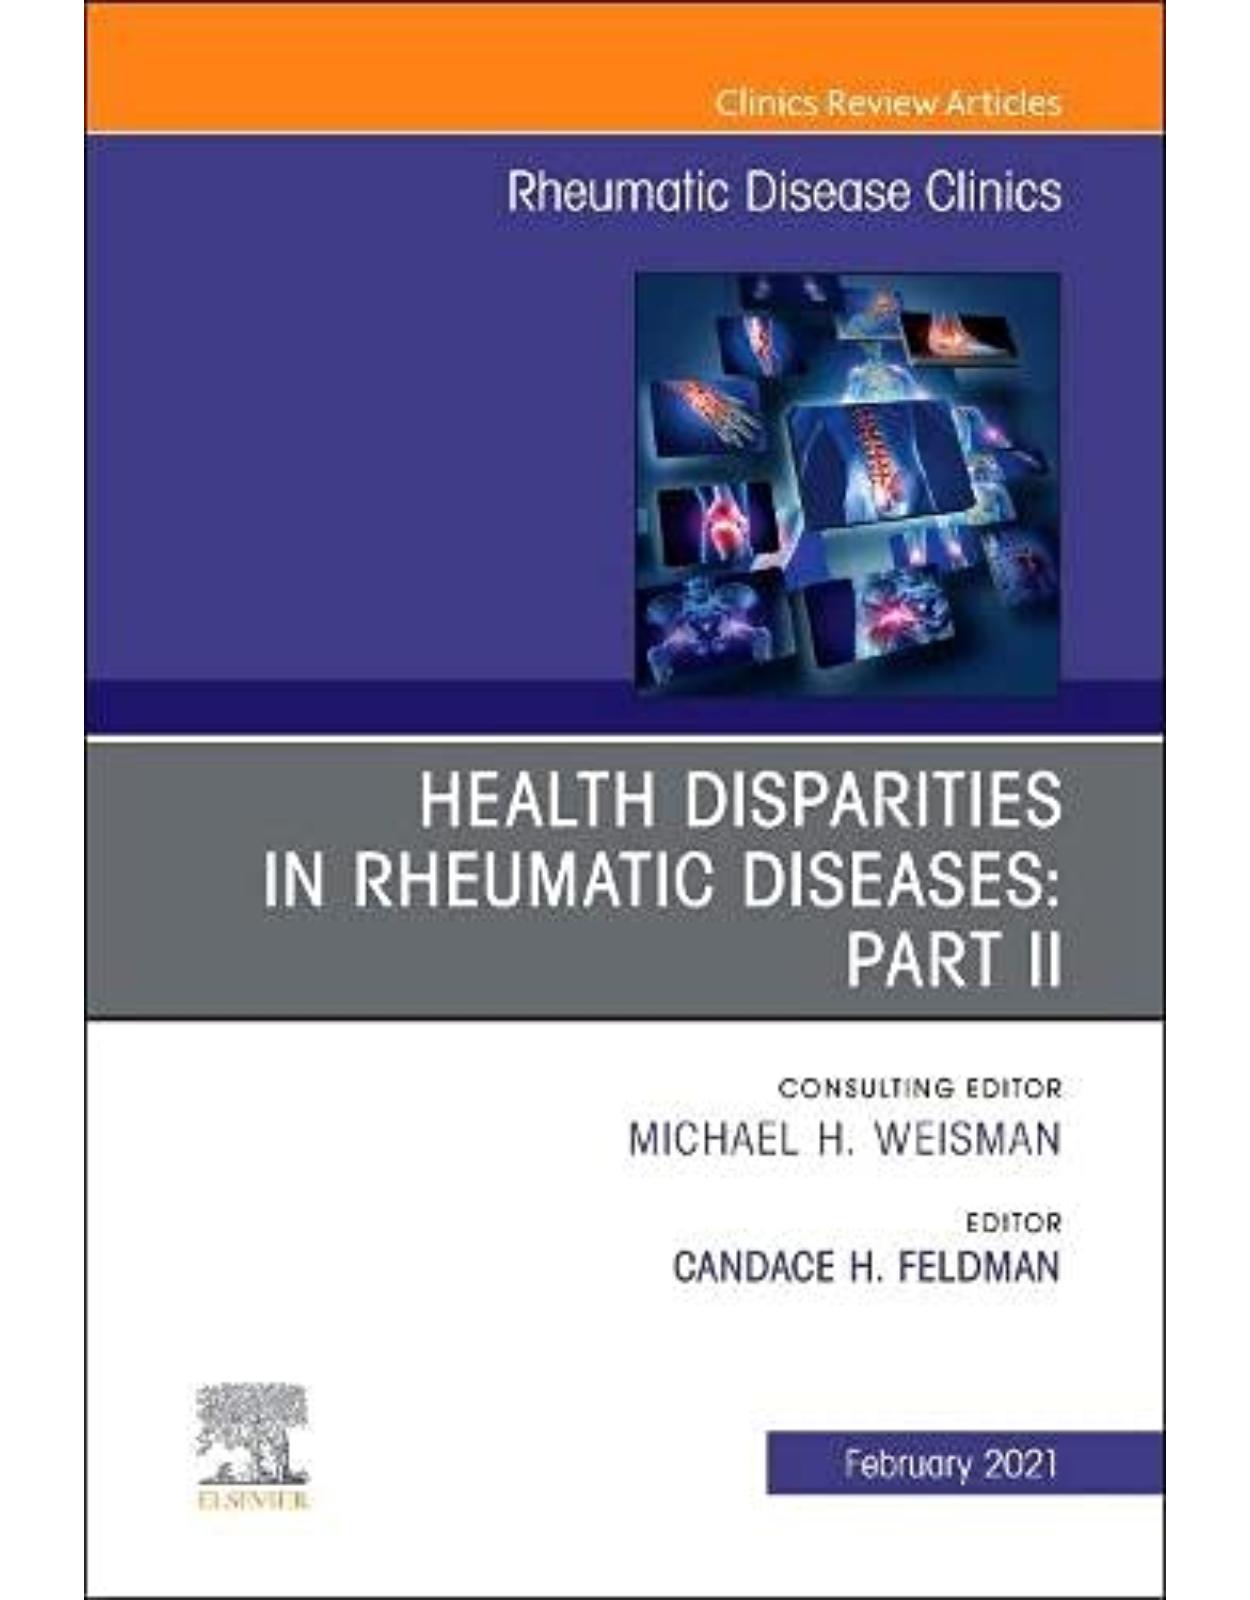 Health disparities in rheumatic diseases: Part II,